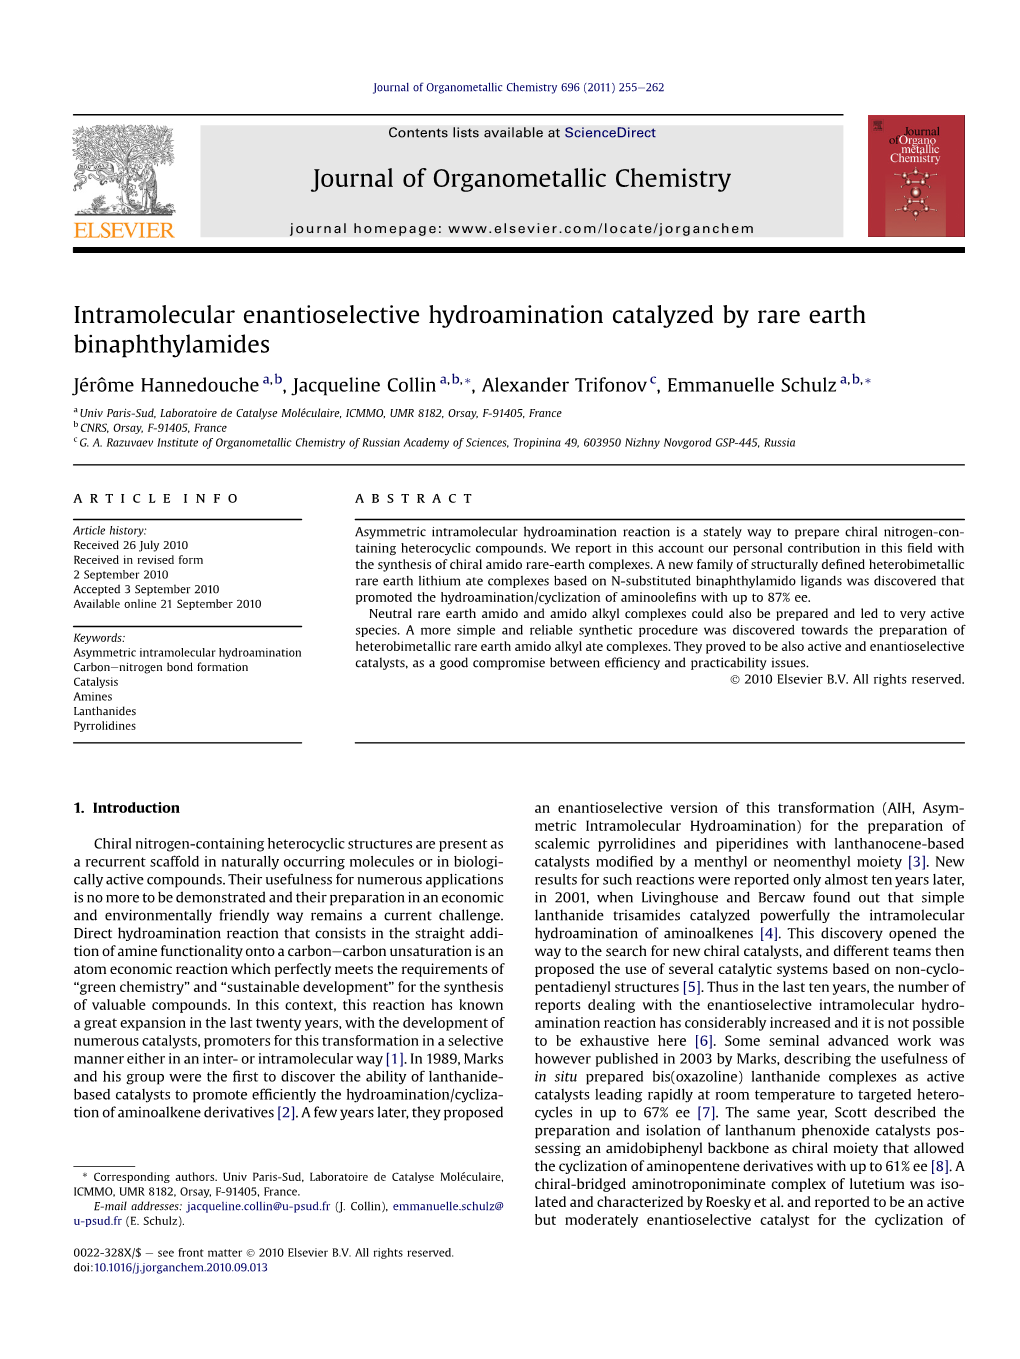 Intramolecular Enantioselective Hydroamination Catalyzed by Rare Earth Binaphthylamides